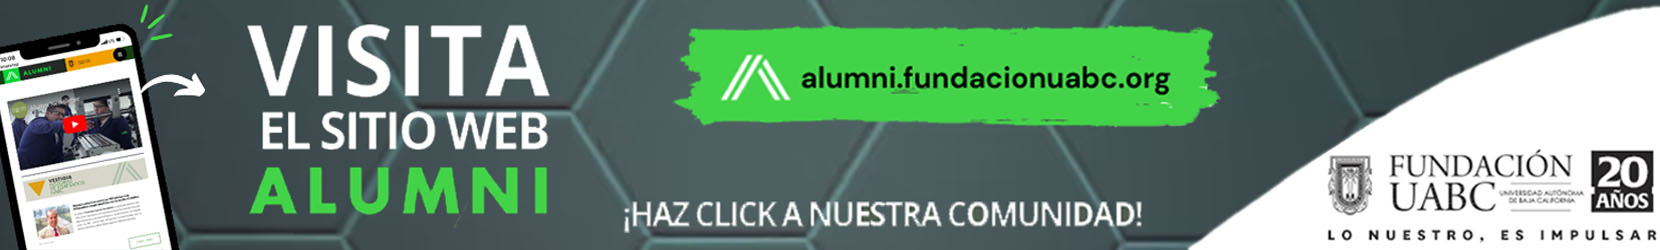 https://alumni.fundacionuabc.org/